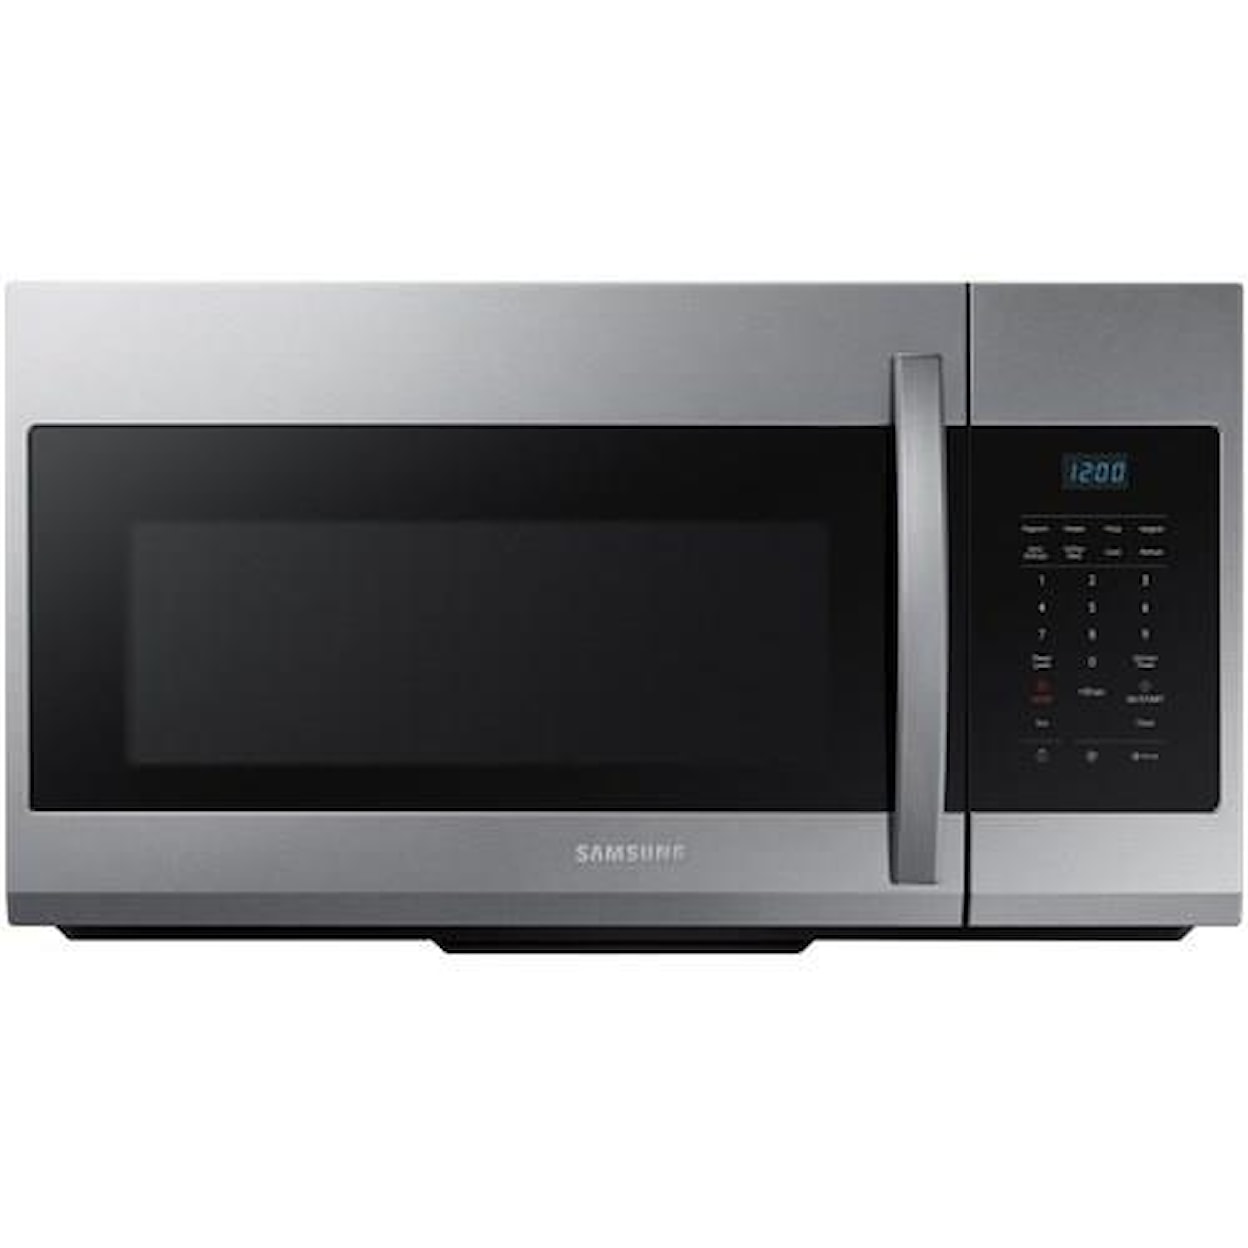 Samsung Appliances Microwave Over The Range Microwave